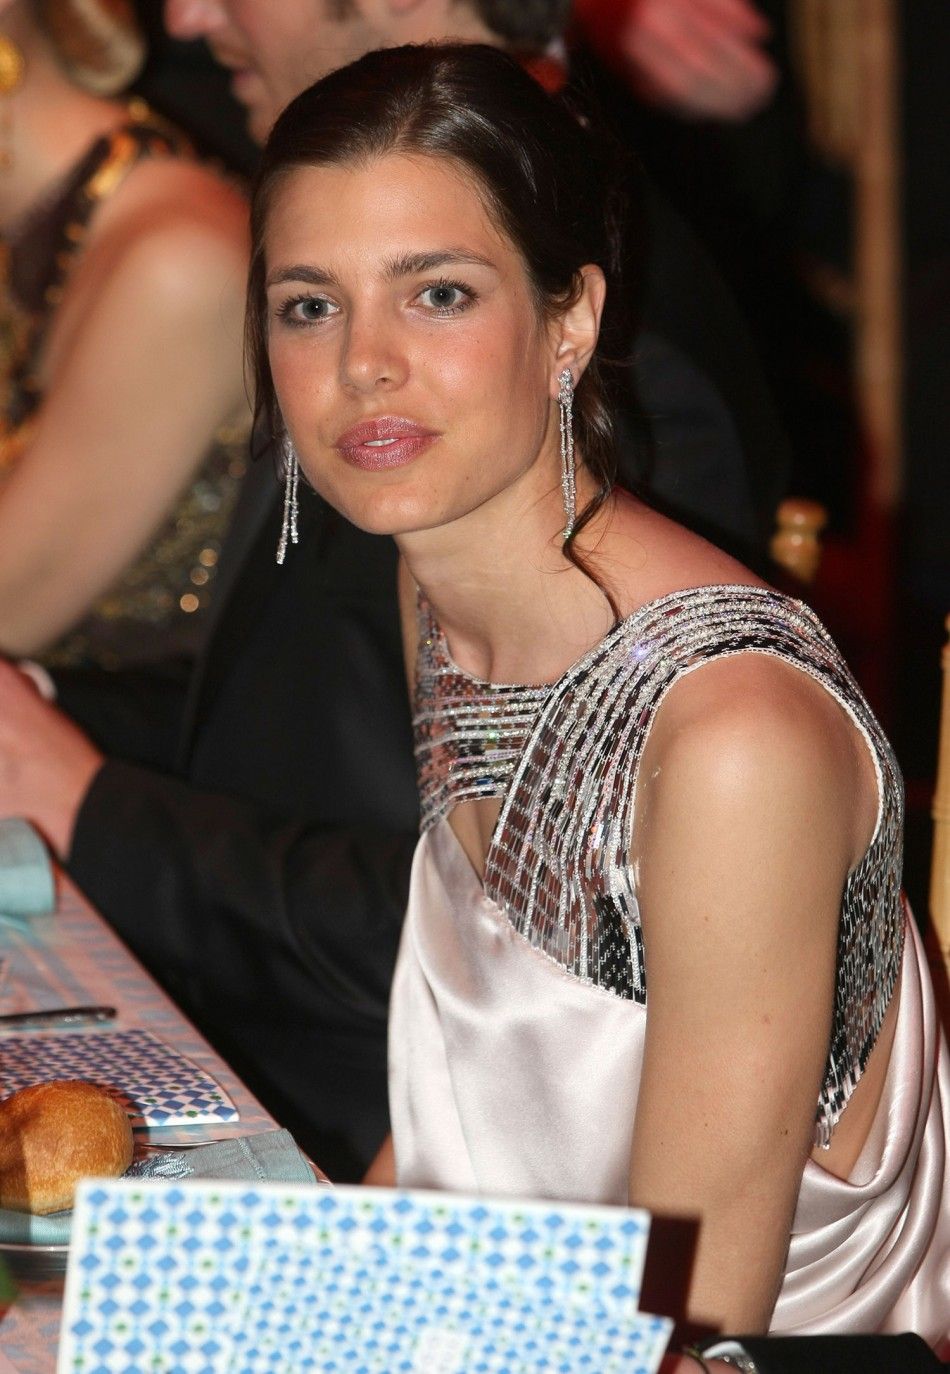 Gucci Names Princess of Monaco as the New Face 